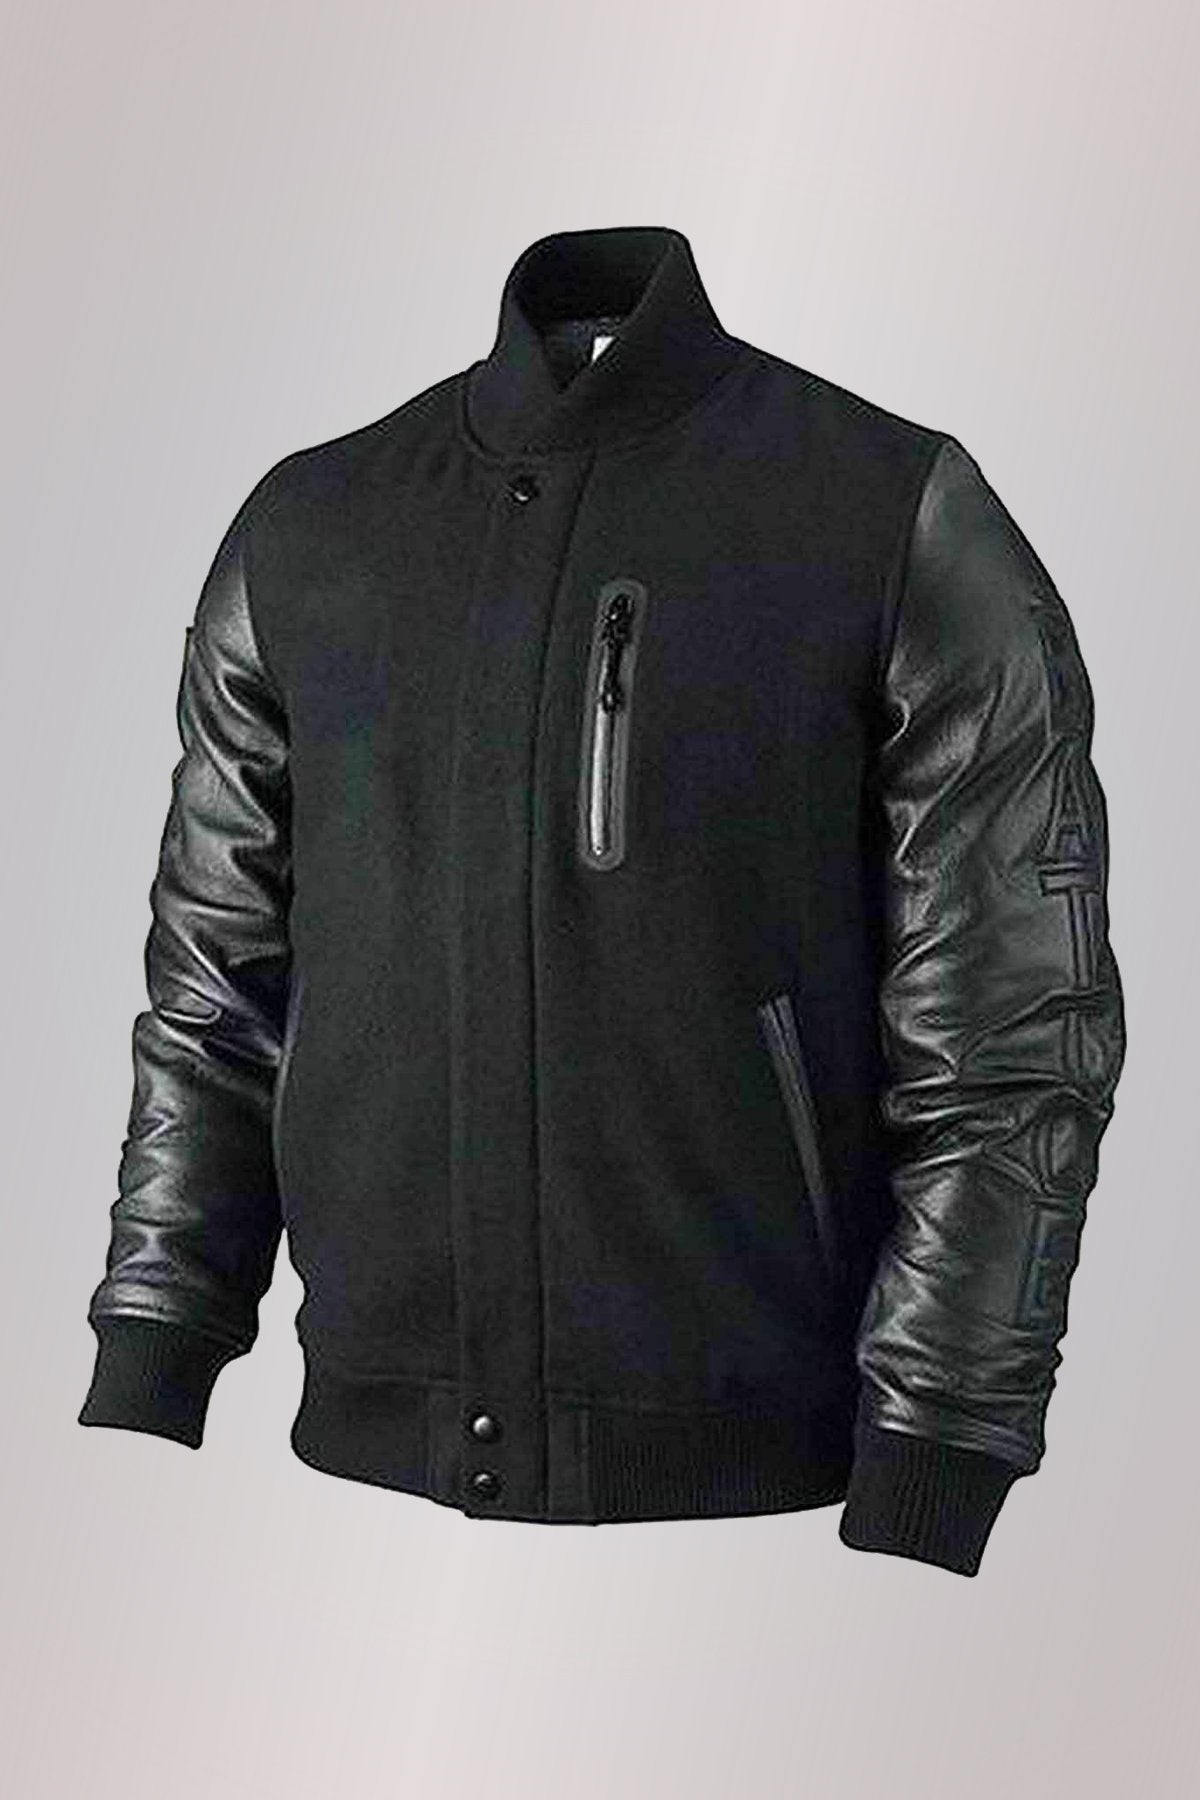 Michael B. Jordan Creed Bomber Jacket With Cowhide Leather Sleeves